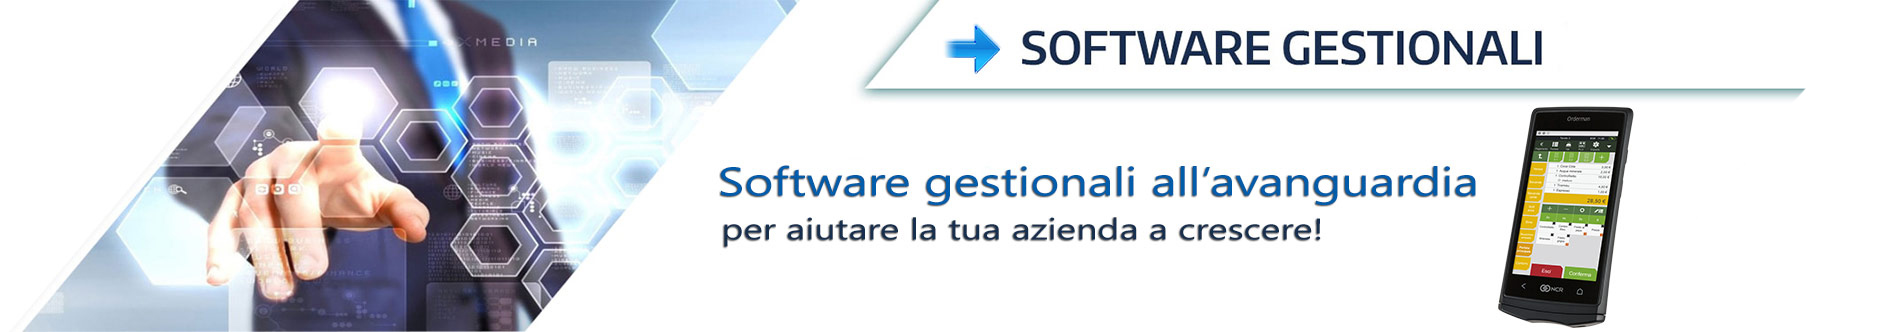 software gestionale